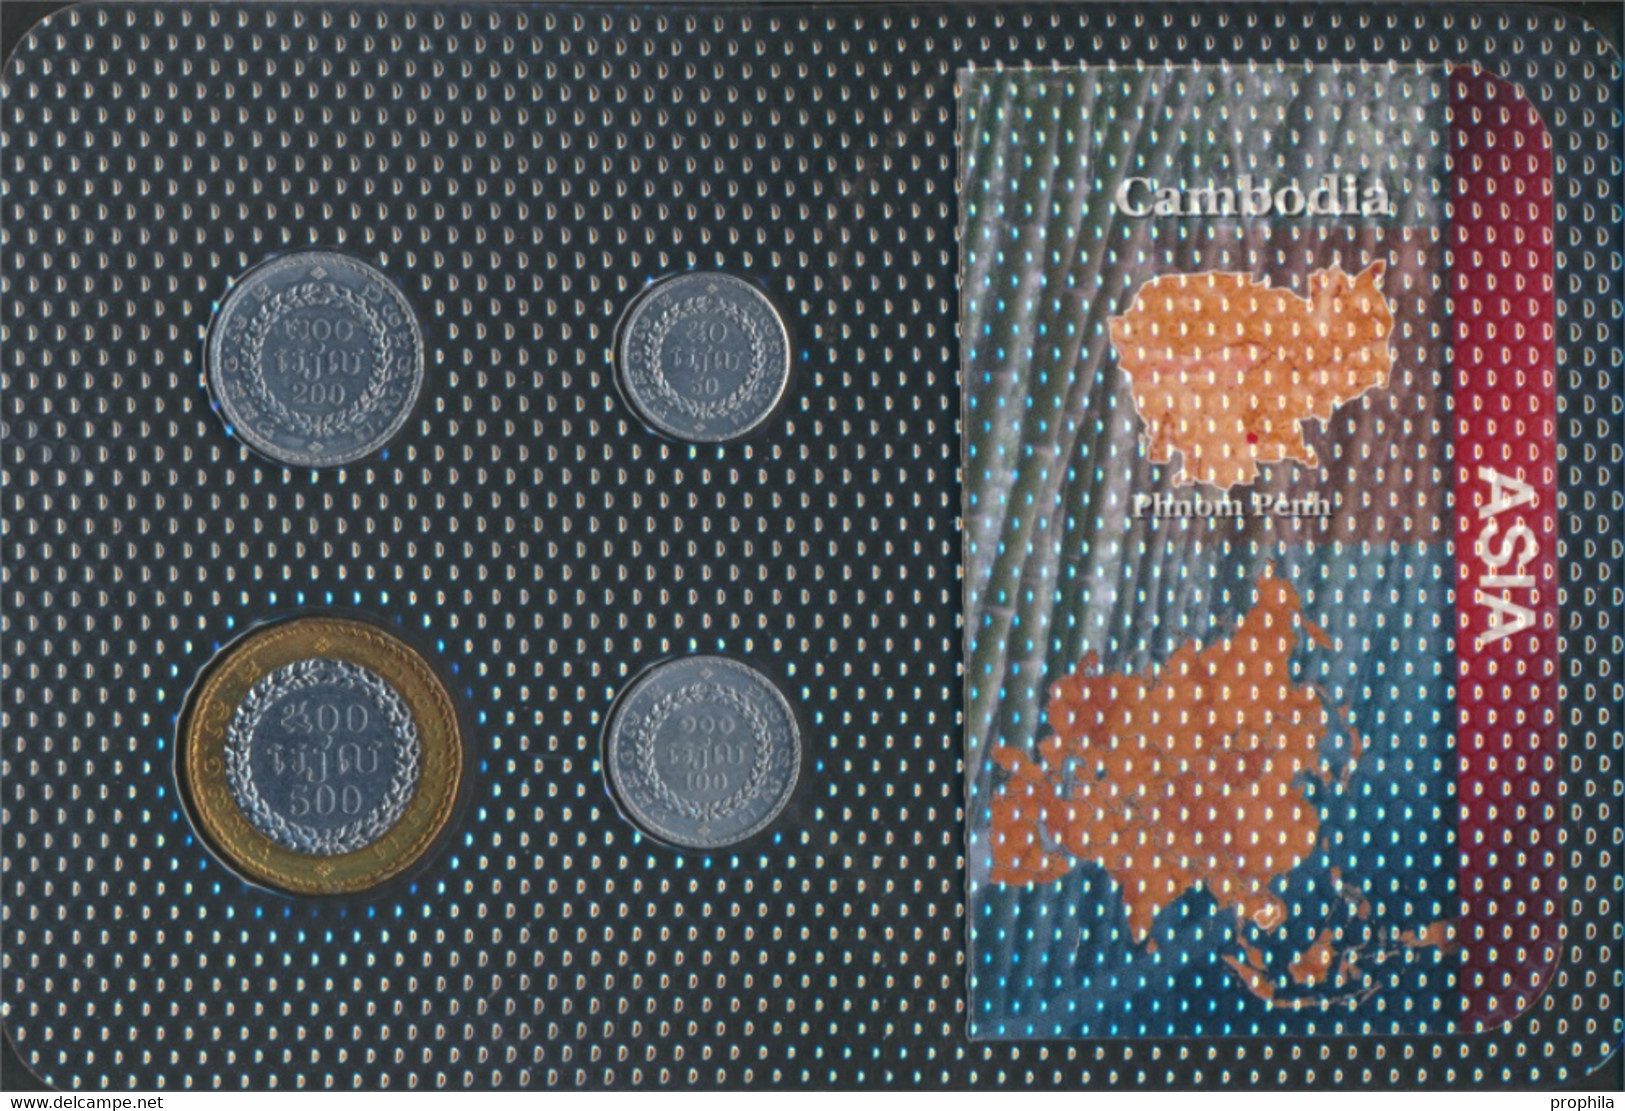 Kambodscha 1994 Stgl./unzirkuliert Kursmünzen 1994 50 Bis 500 Riel (9764267 - Cambodge